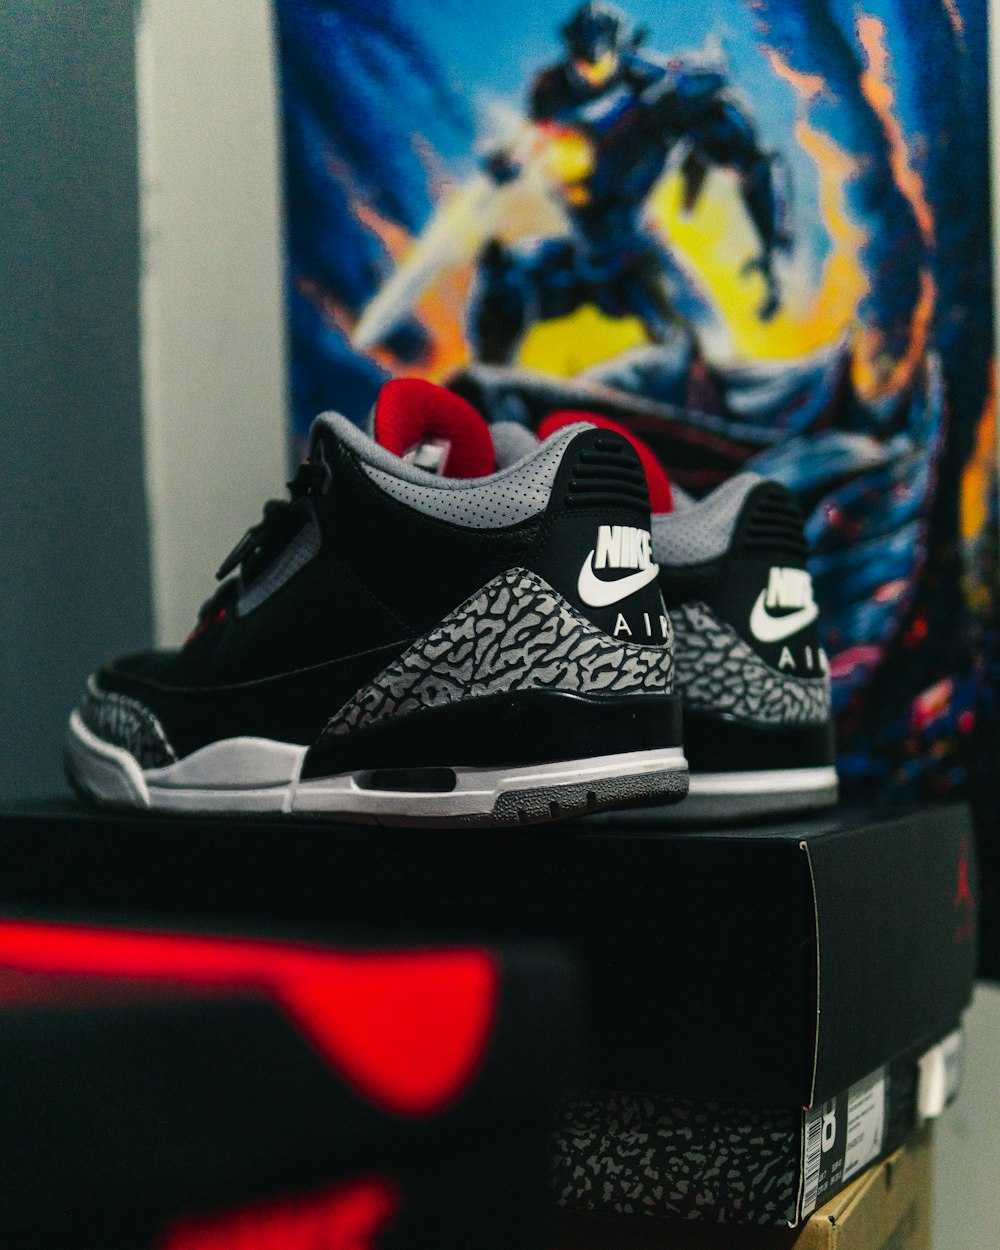 pair of black-red-white Air Jordan 3's with box